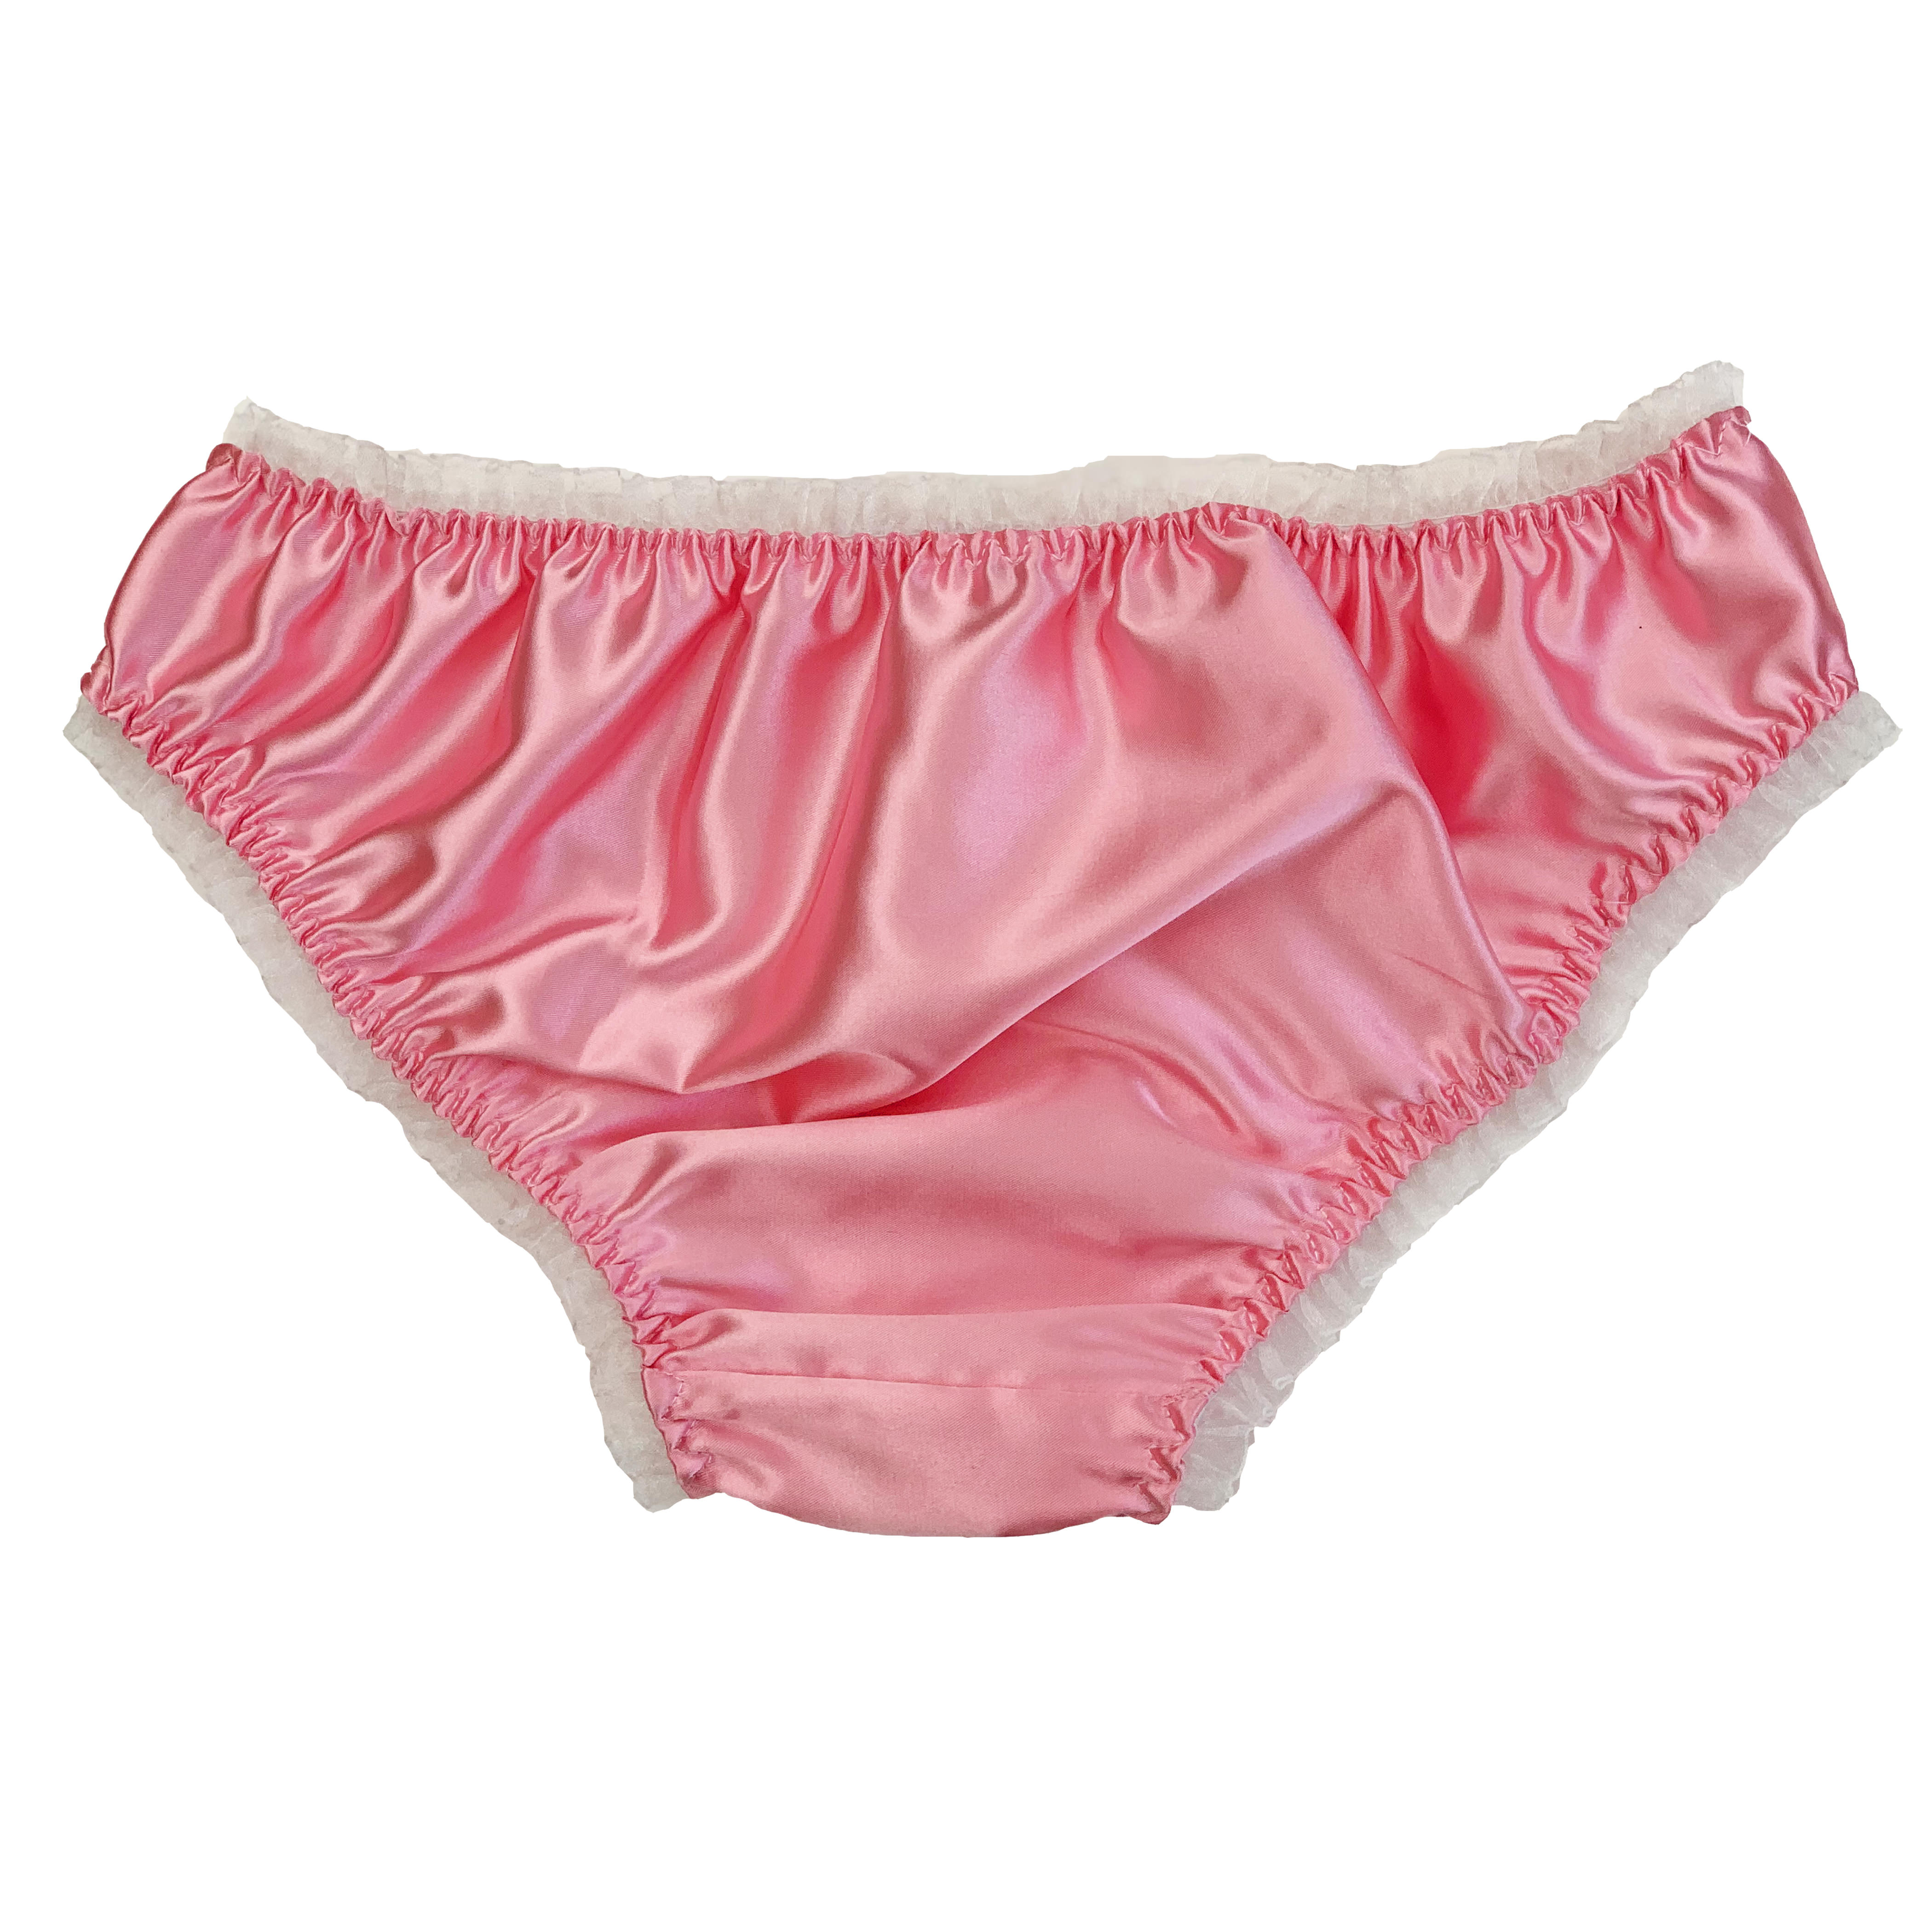 Satin Sissy Ruffled Frilly Panties Bikini Knicker Underwear Briefs Size 10 20 15 92 Picclick